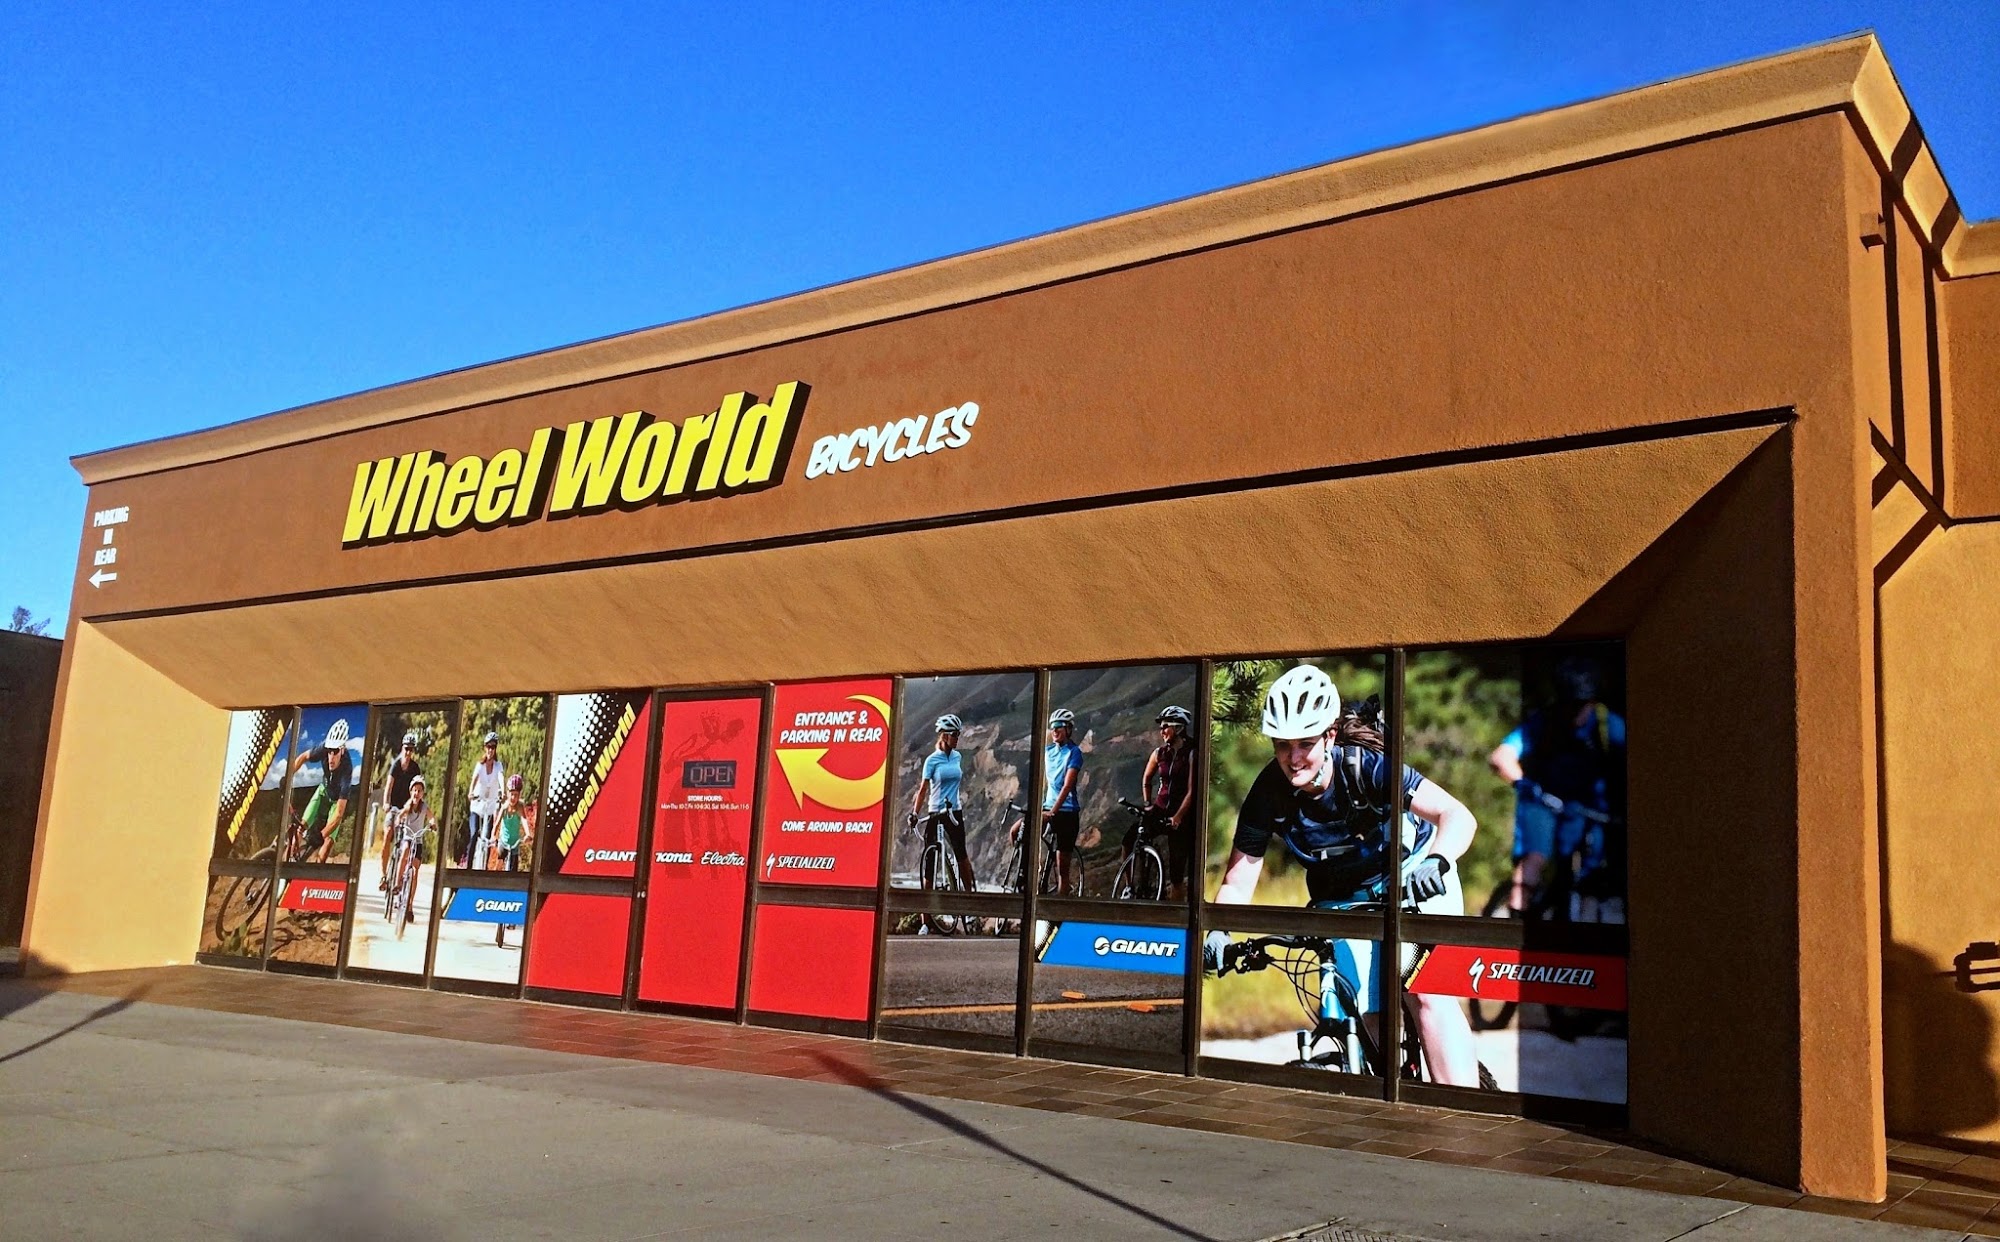 Wheel World Bicycles